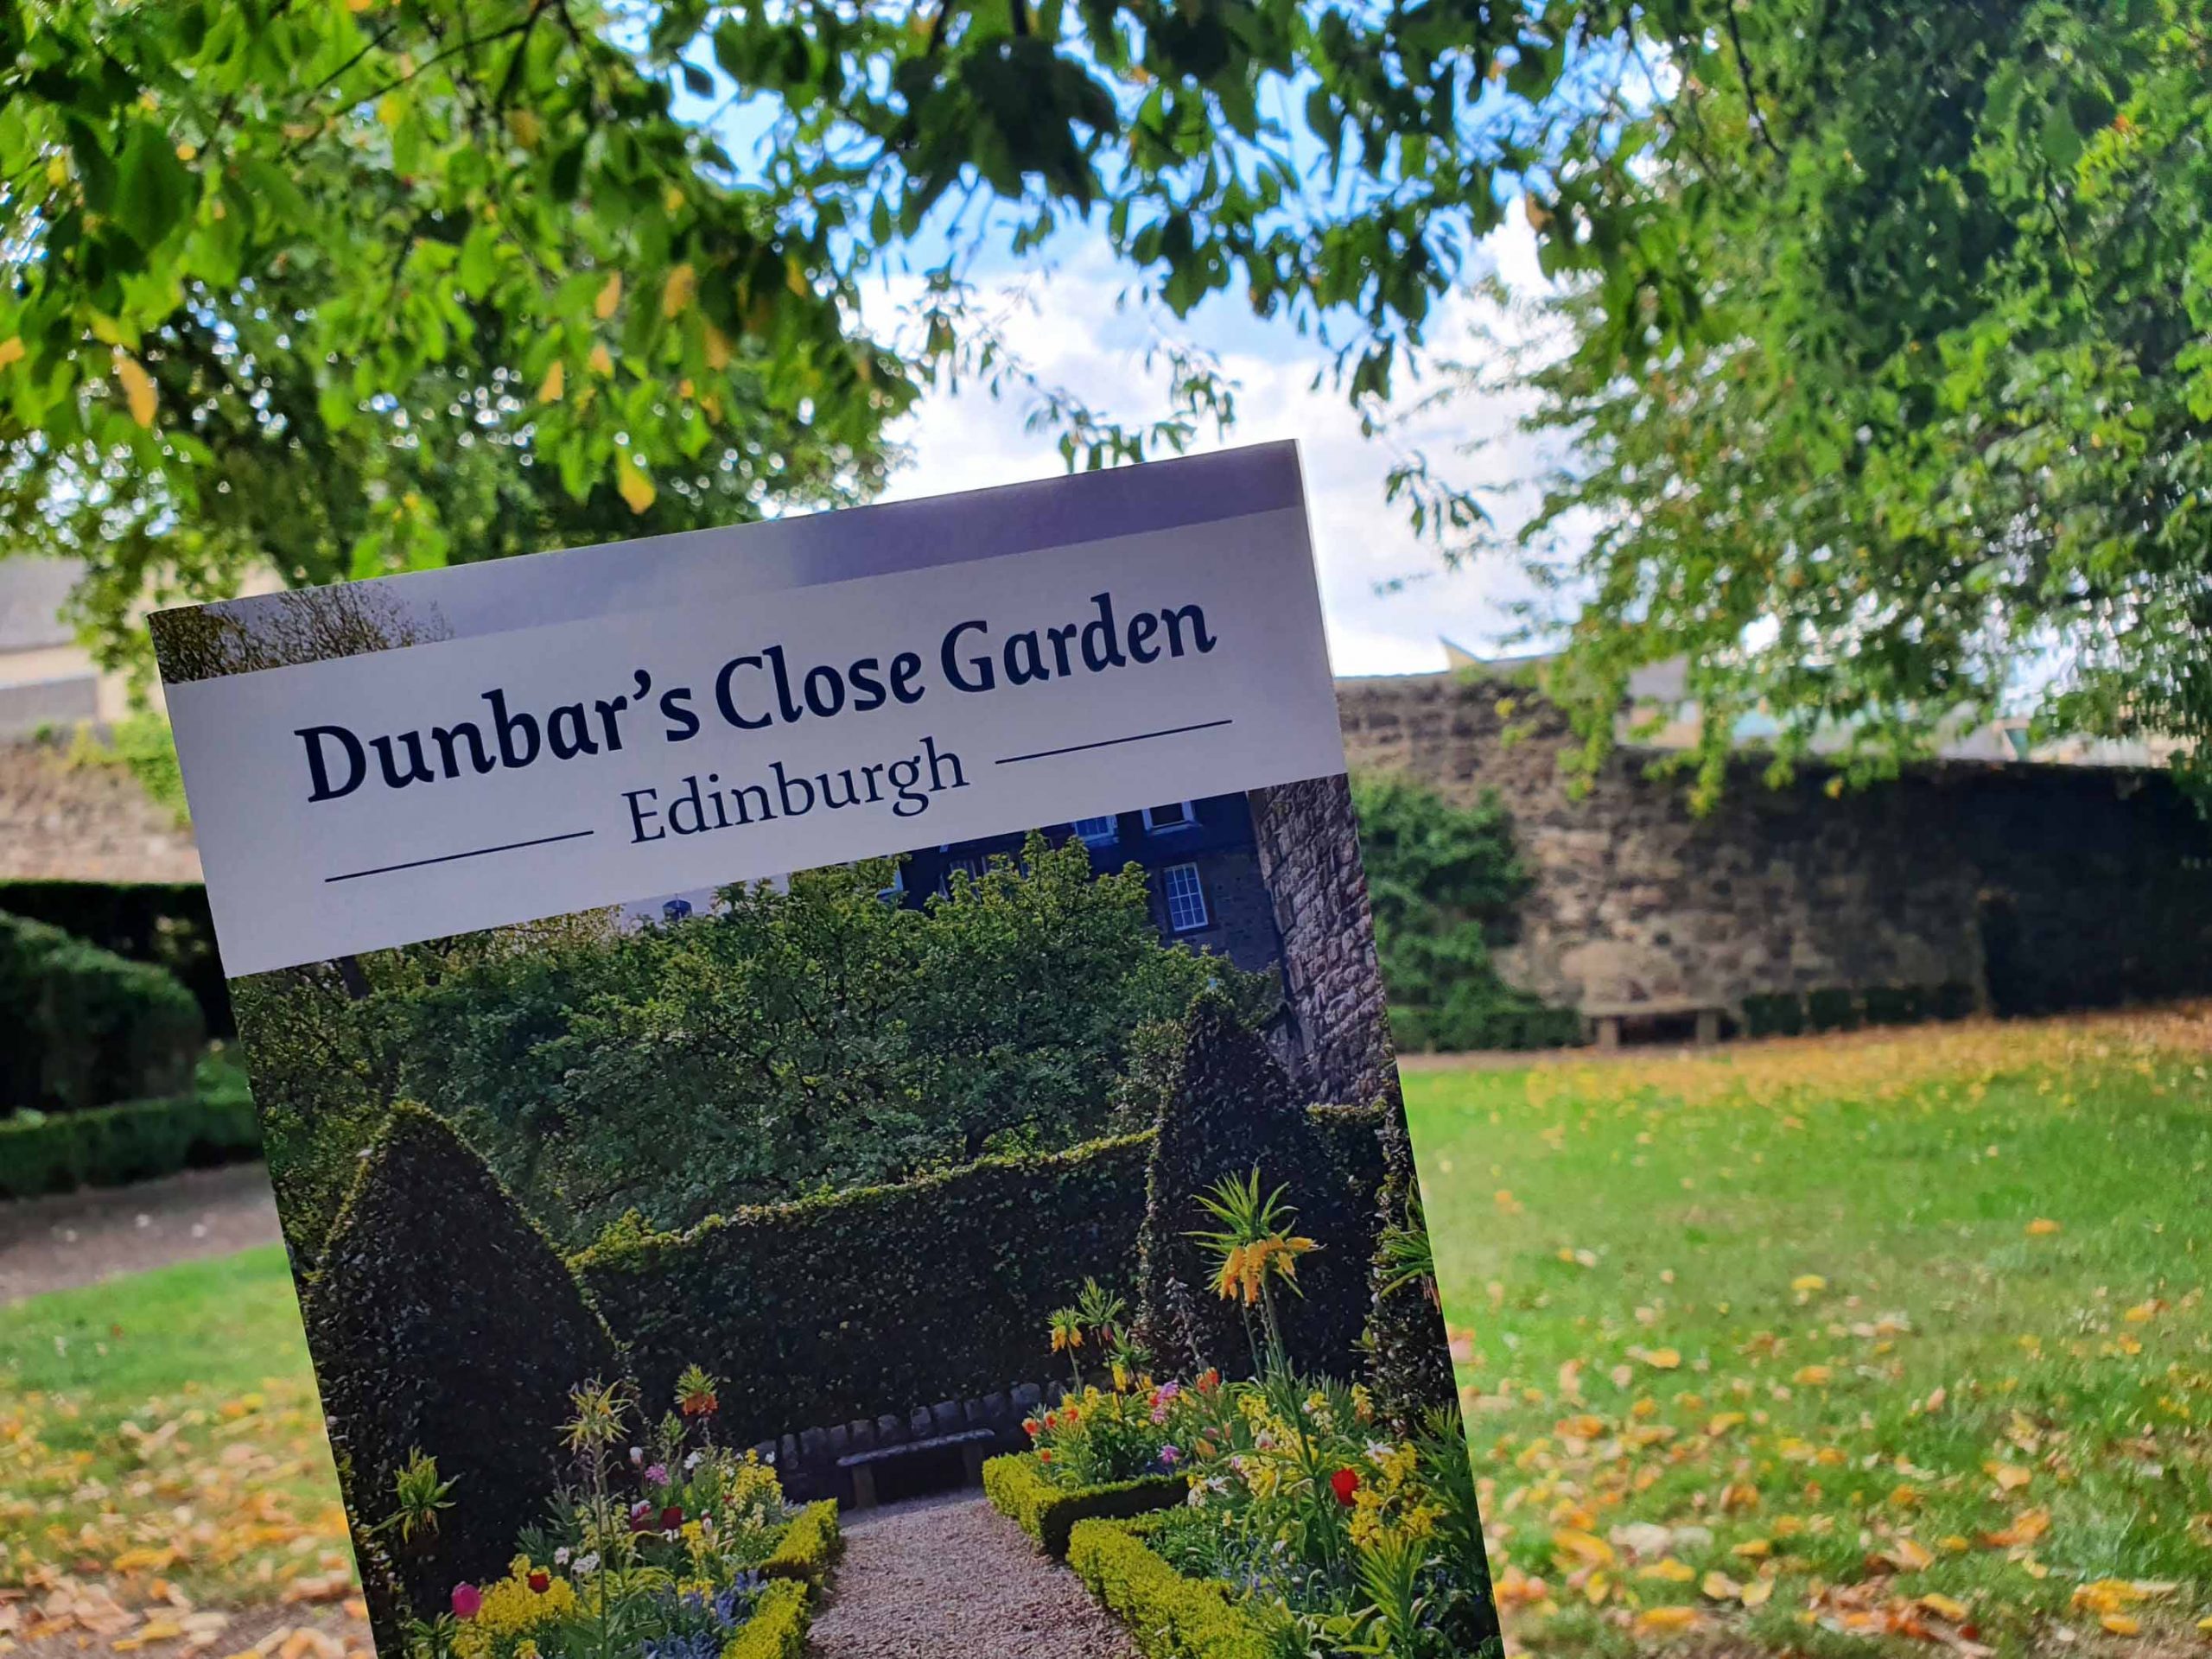 Dunbars-Close-Garden - eine grüne Oase in Edinburgh